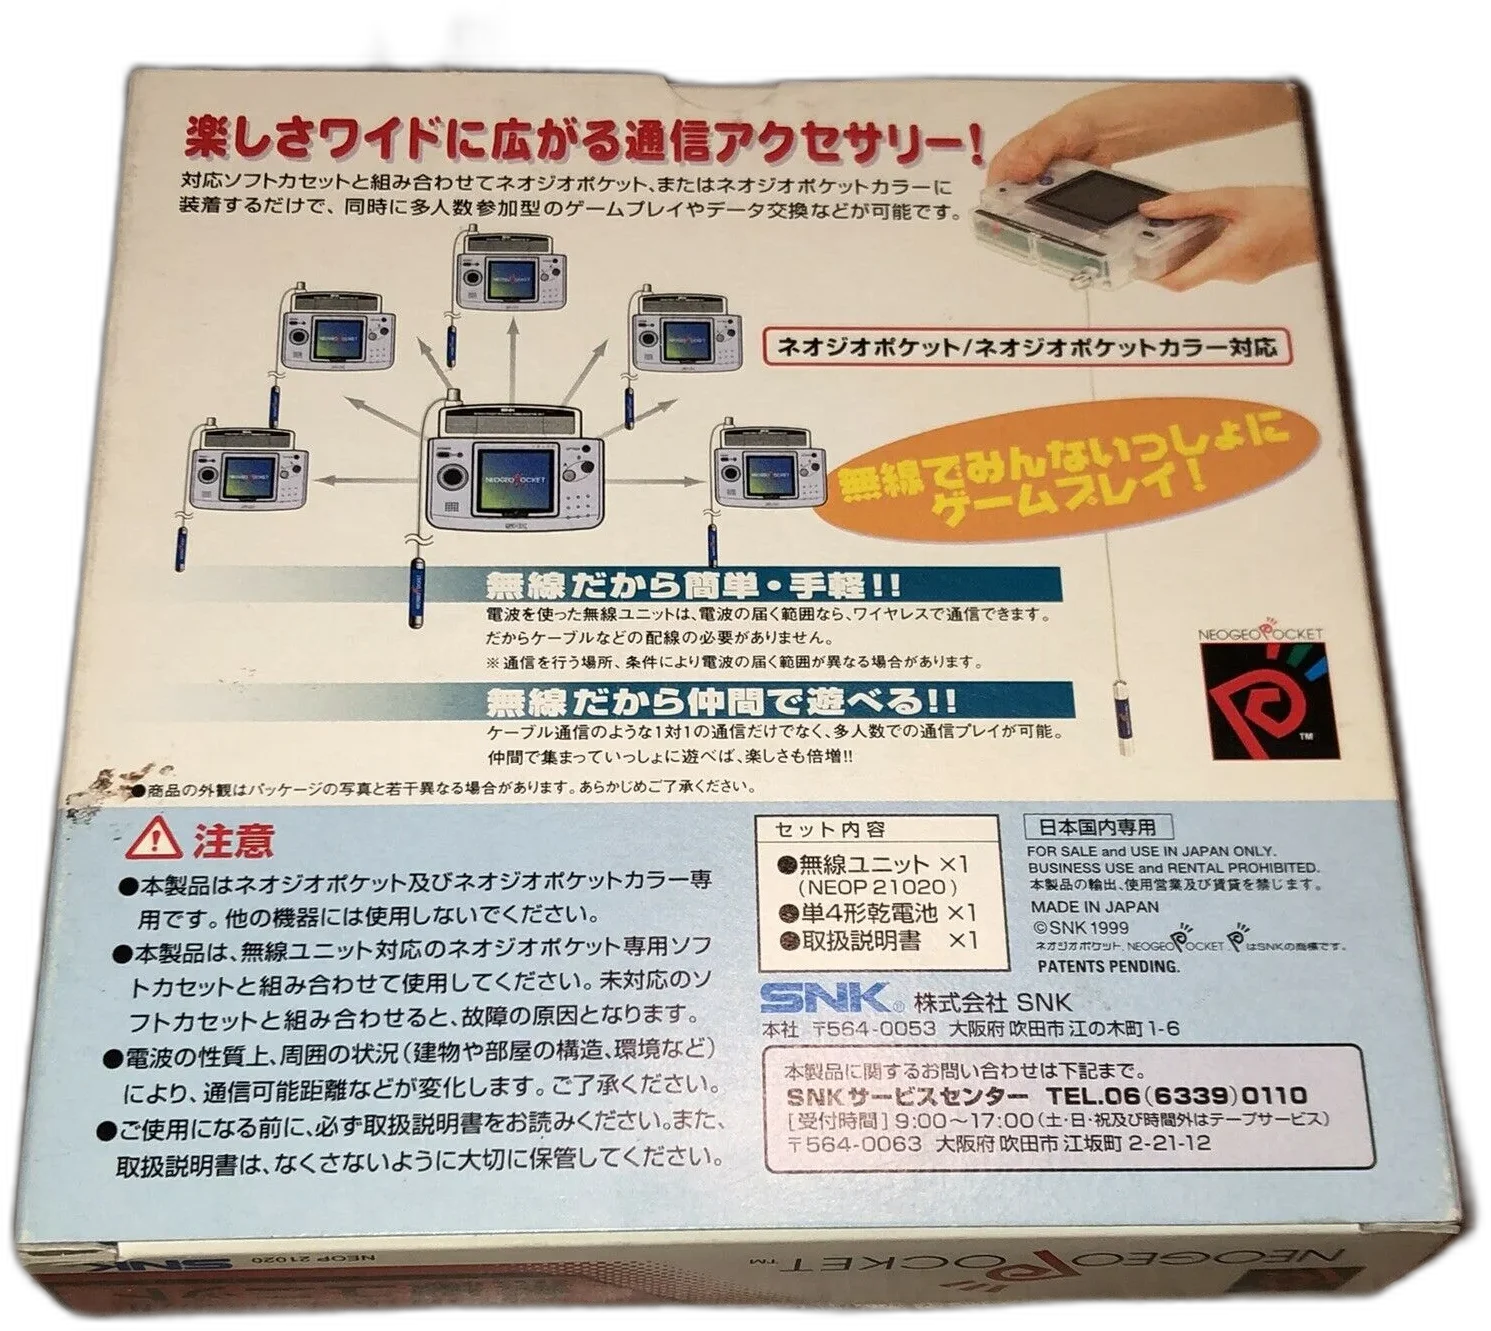 Neo Geo Pocket Wireless Communication Device